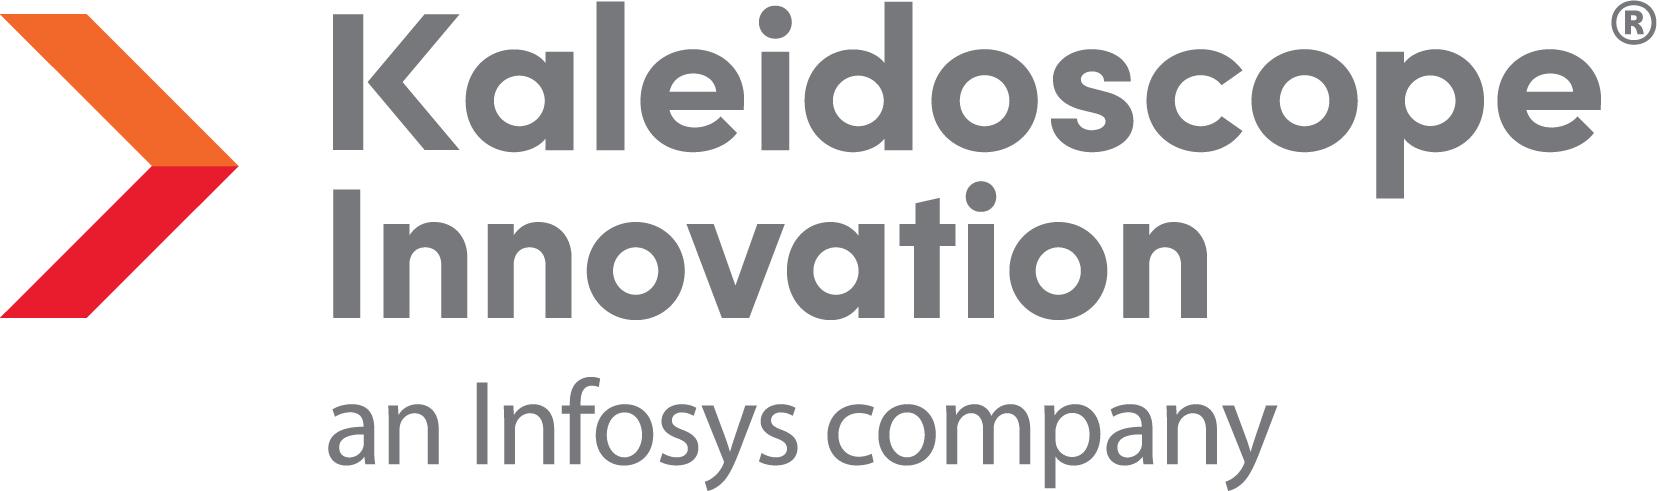 Kaleidoscope Innovation logo